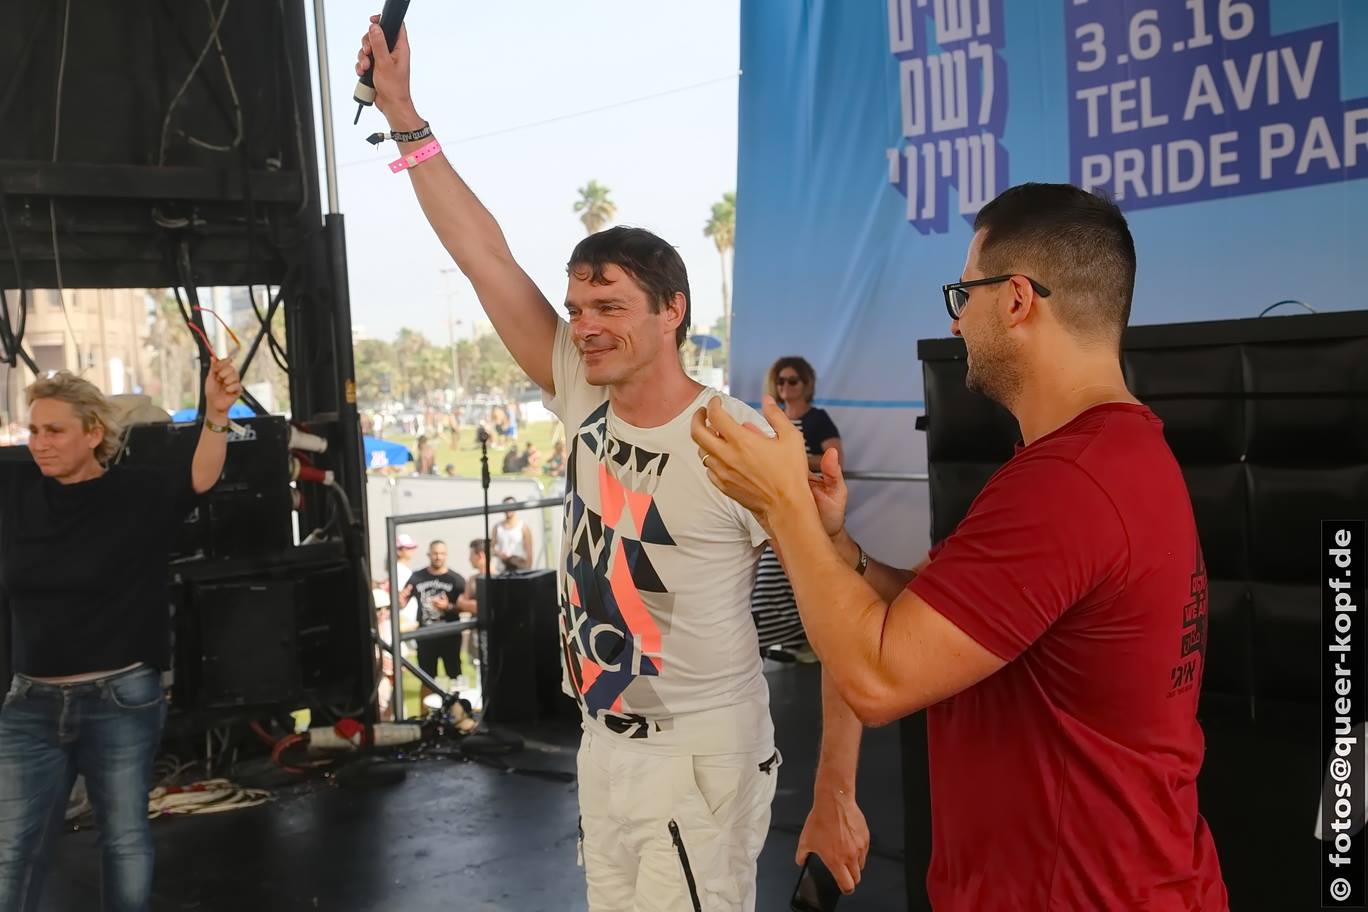 Tel Aviv Pride under pressure for change